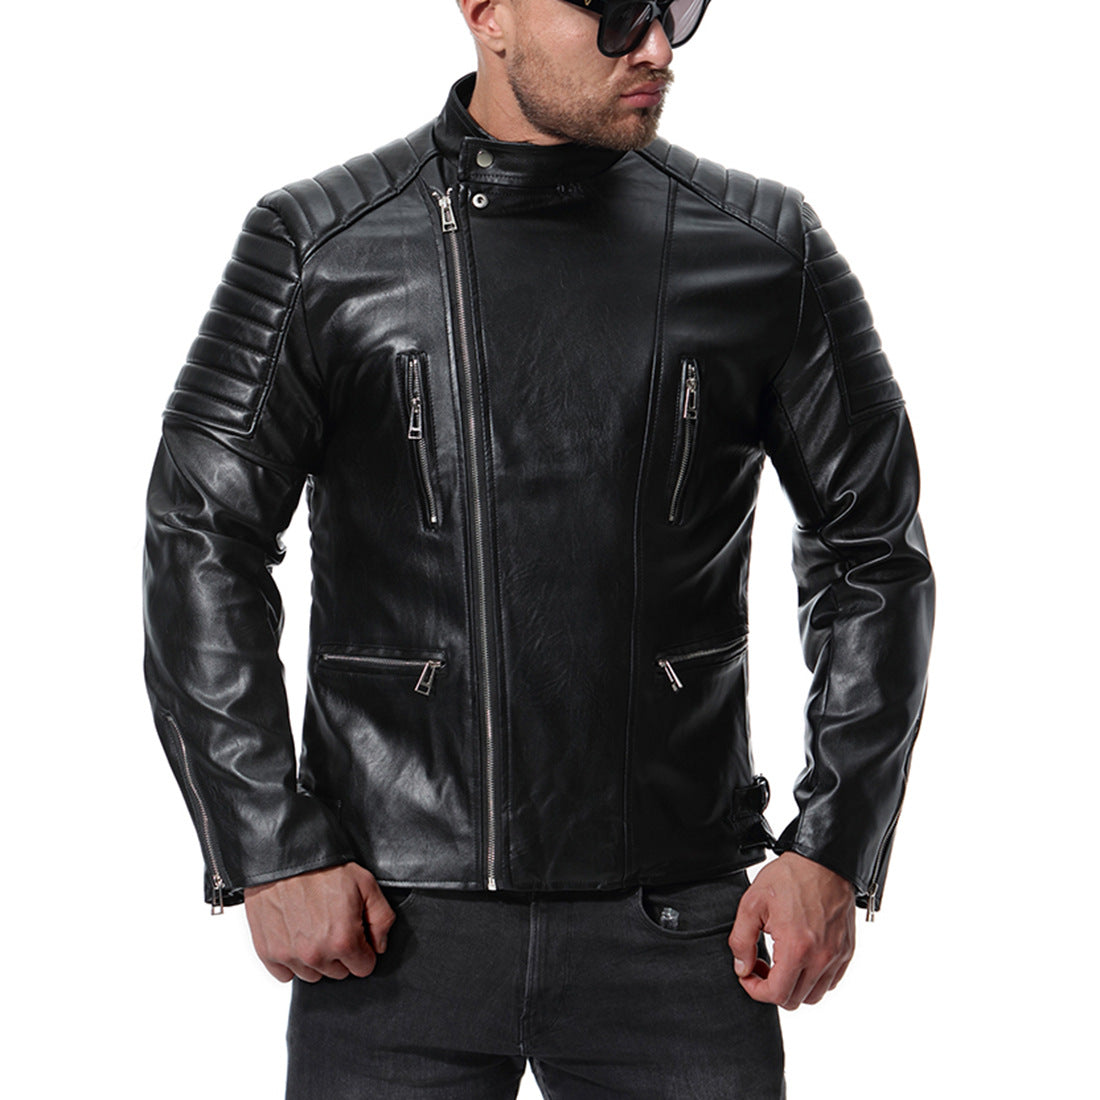 La chaqueta de motocicleta de cuero de Iron Jia, impermeable, impermeable, impermeable, urbano, moto, motocrós, ropa para hombre, chaqueta de montar